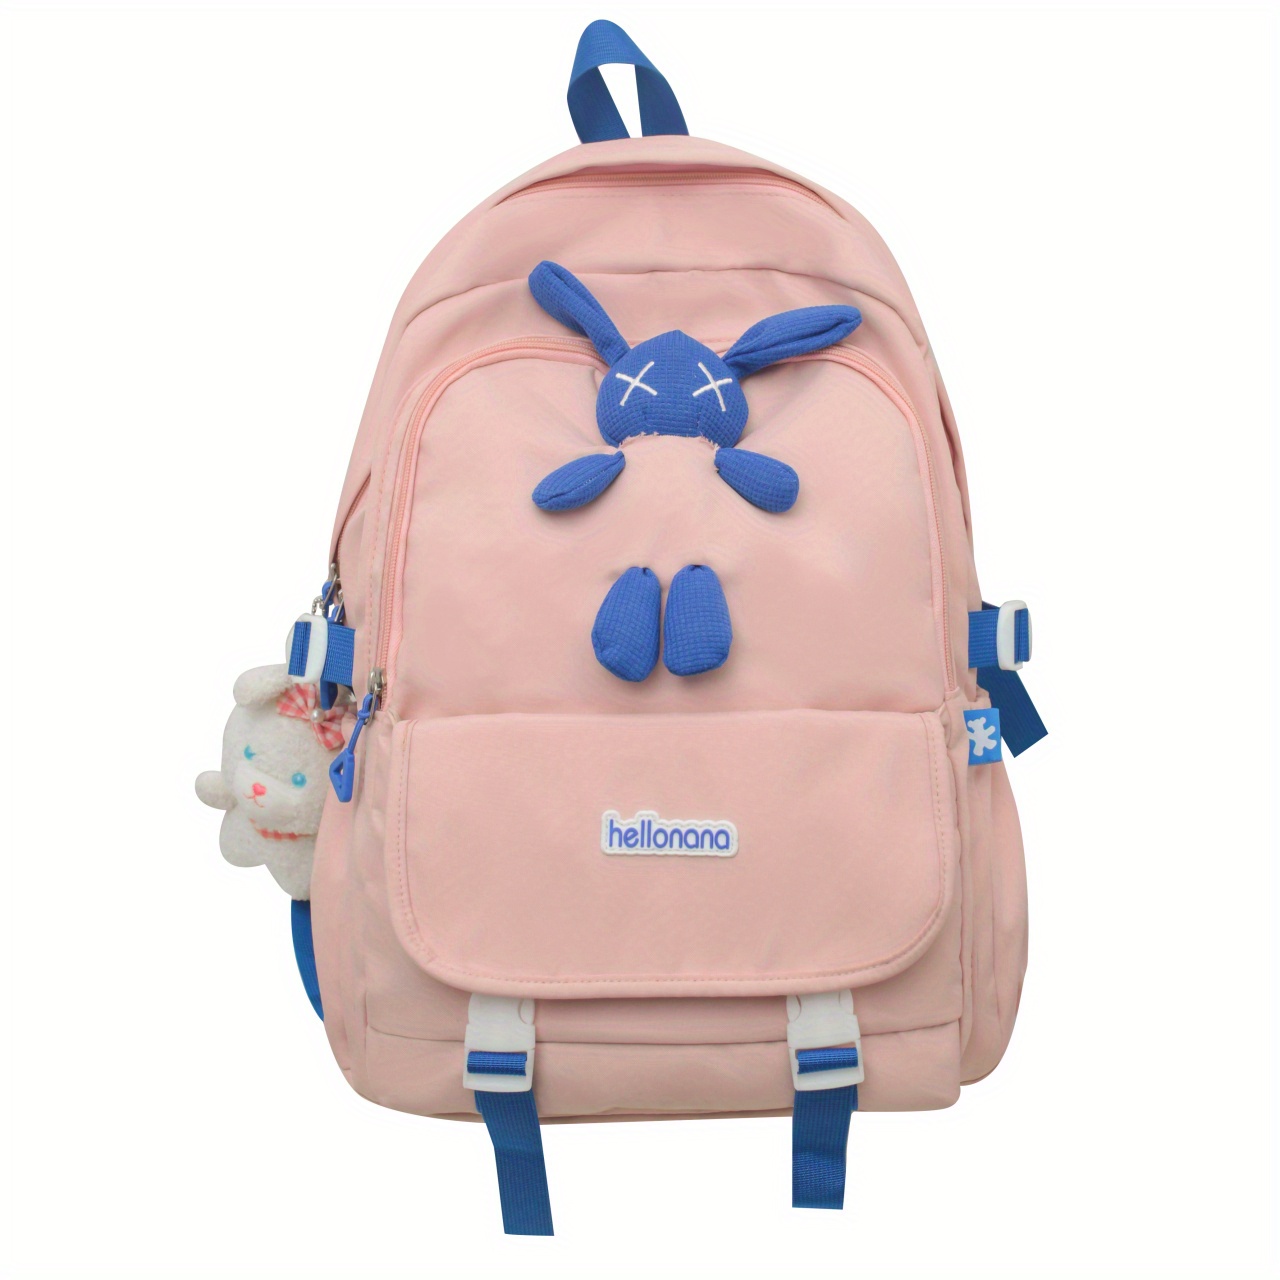 Backpack student school bag boy girl cute bag pendant Hello Kitty-9 designs